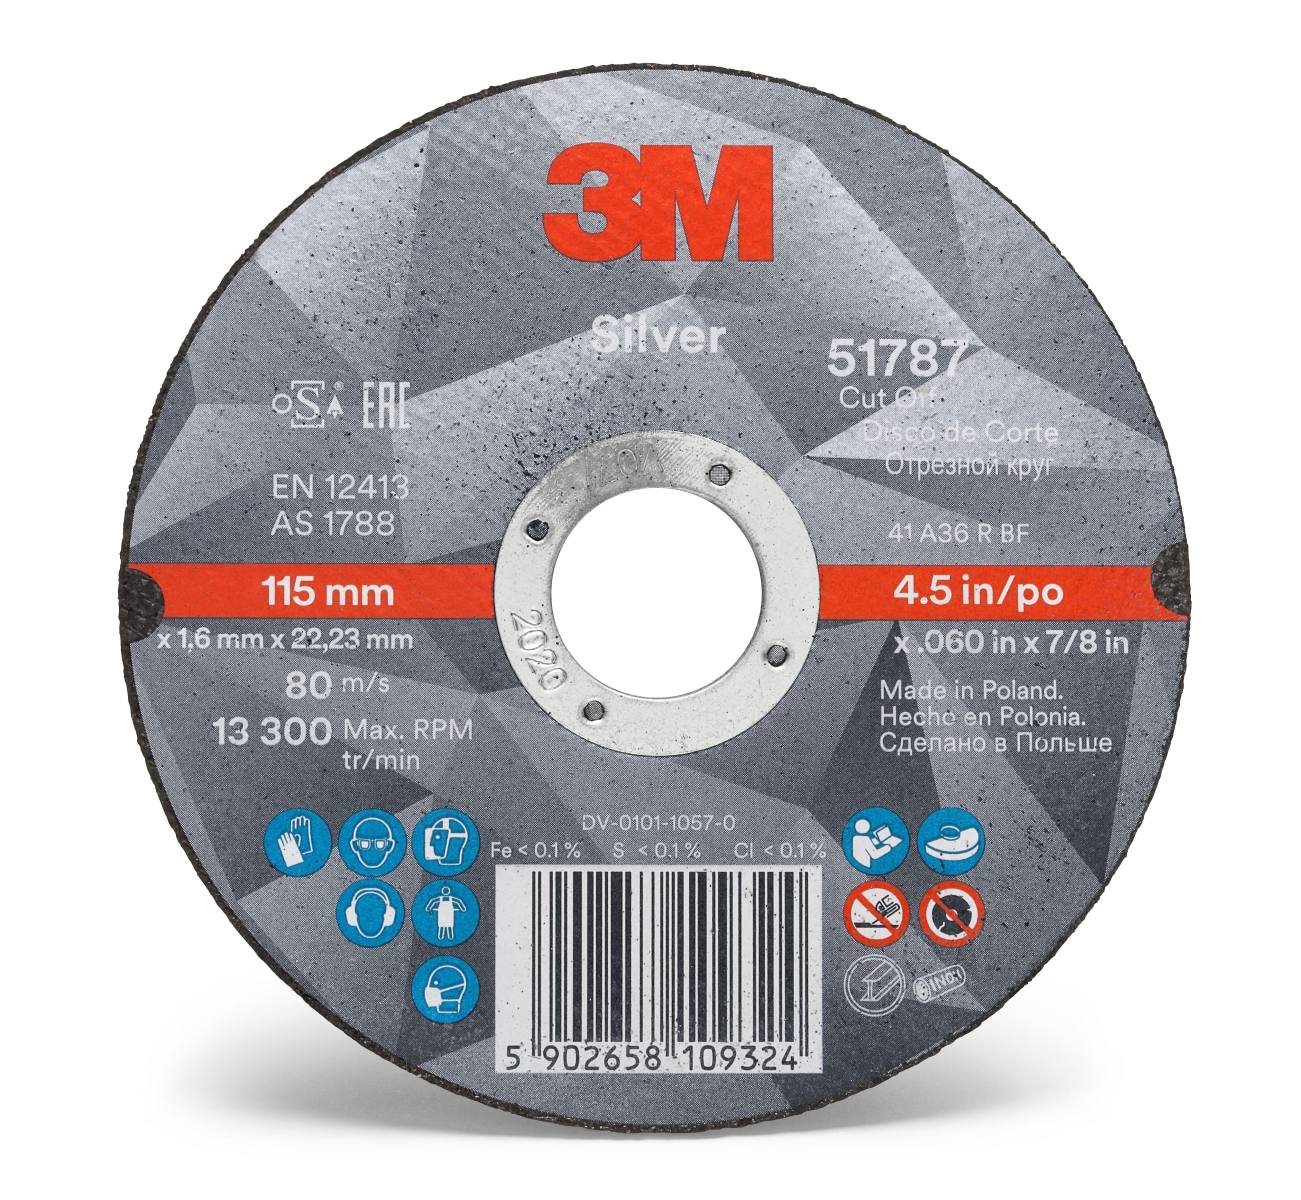 3M Silver Cut-Off Wheel cutting disc, 150 mm, 1.6 mm, 22.23 mm, T41, 51814